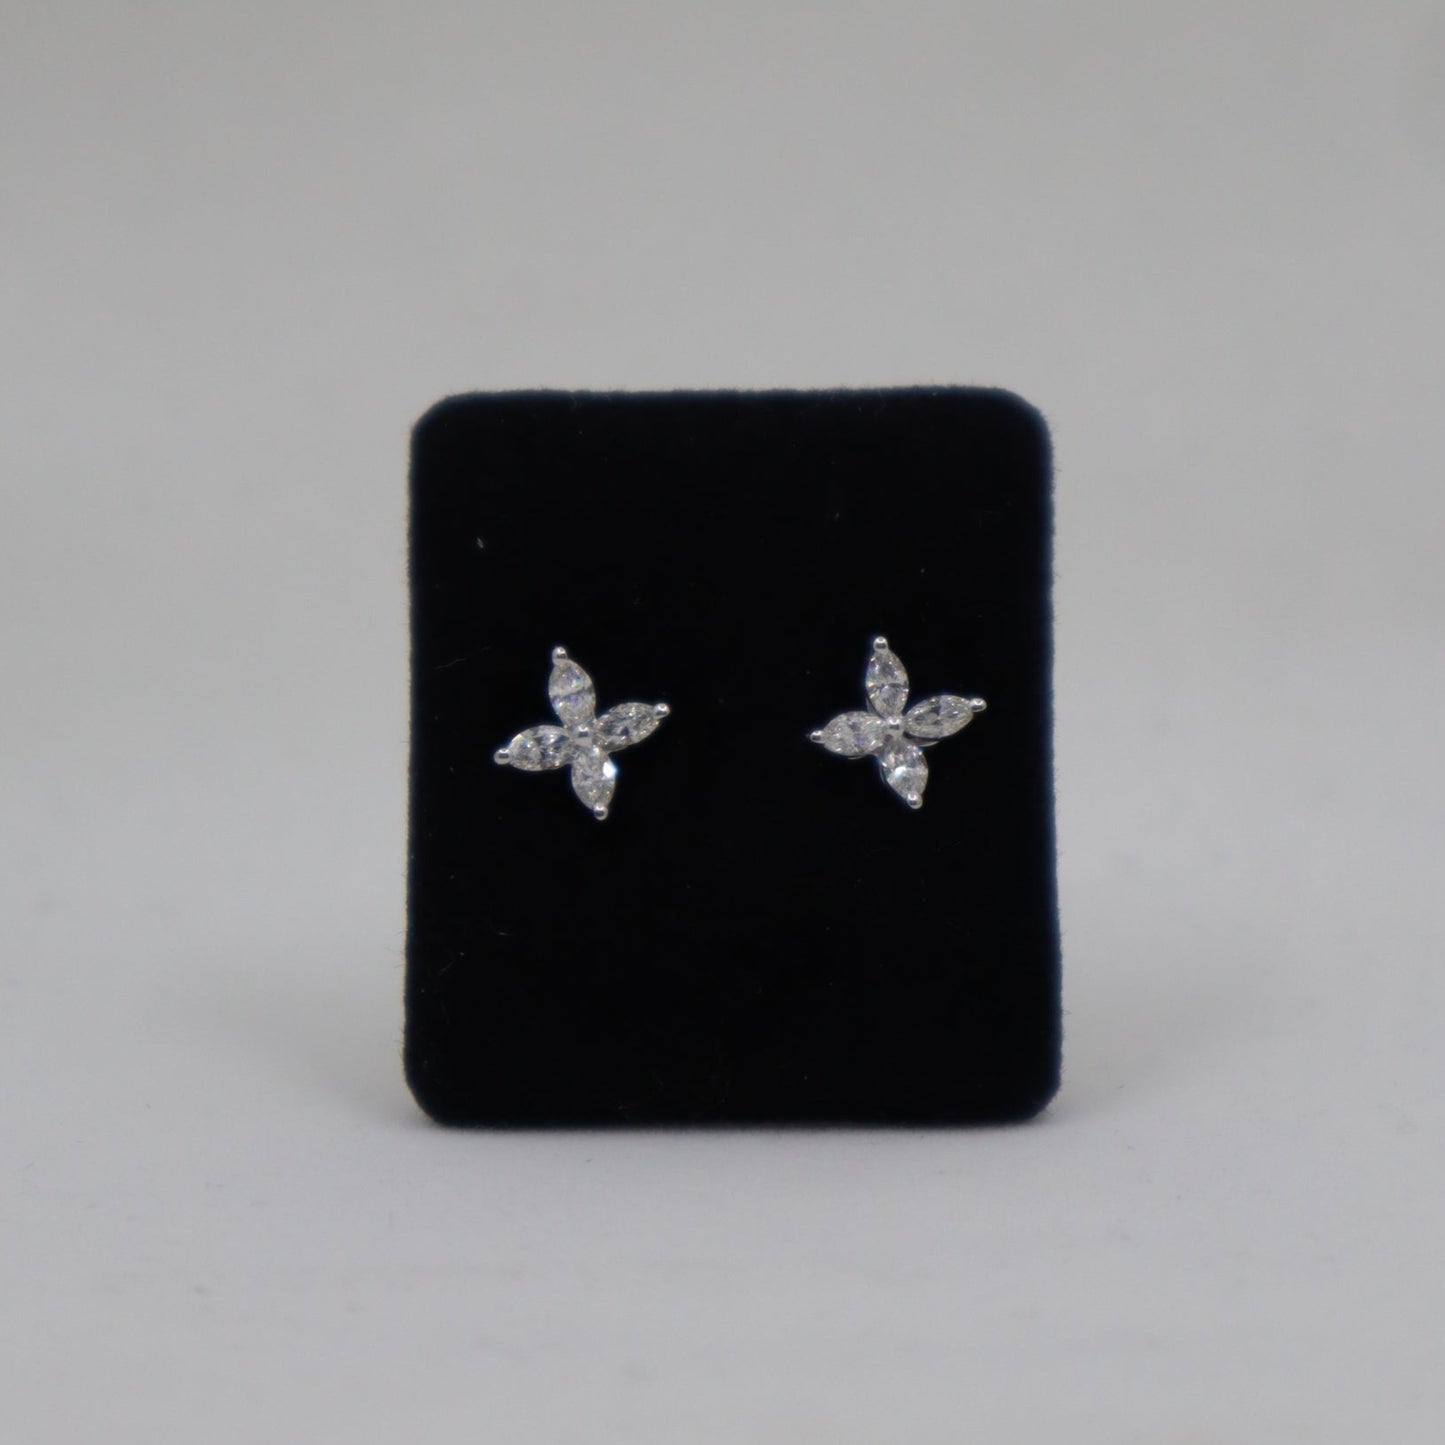 18ct White Gold Diamond Cross Stud Earrings